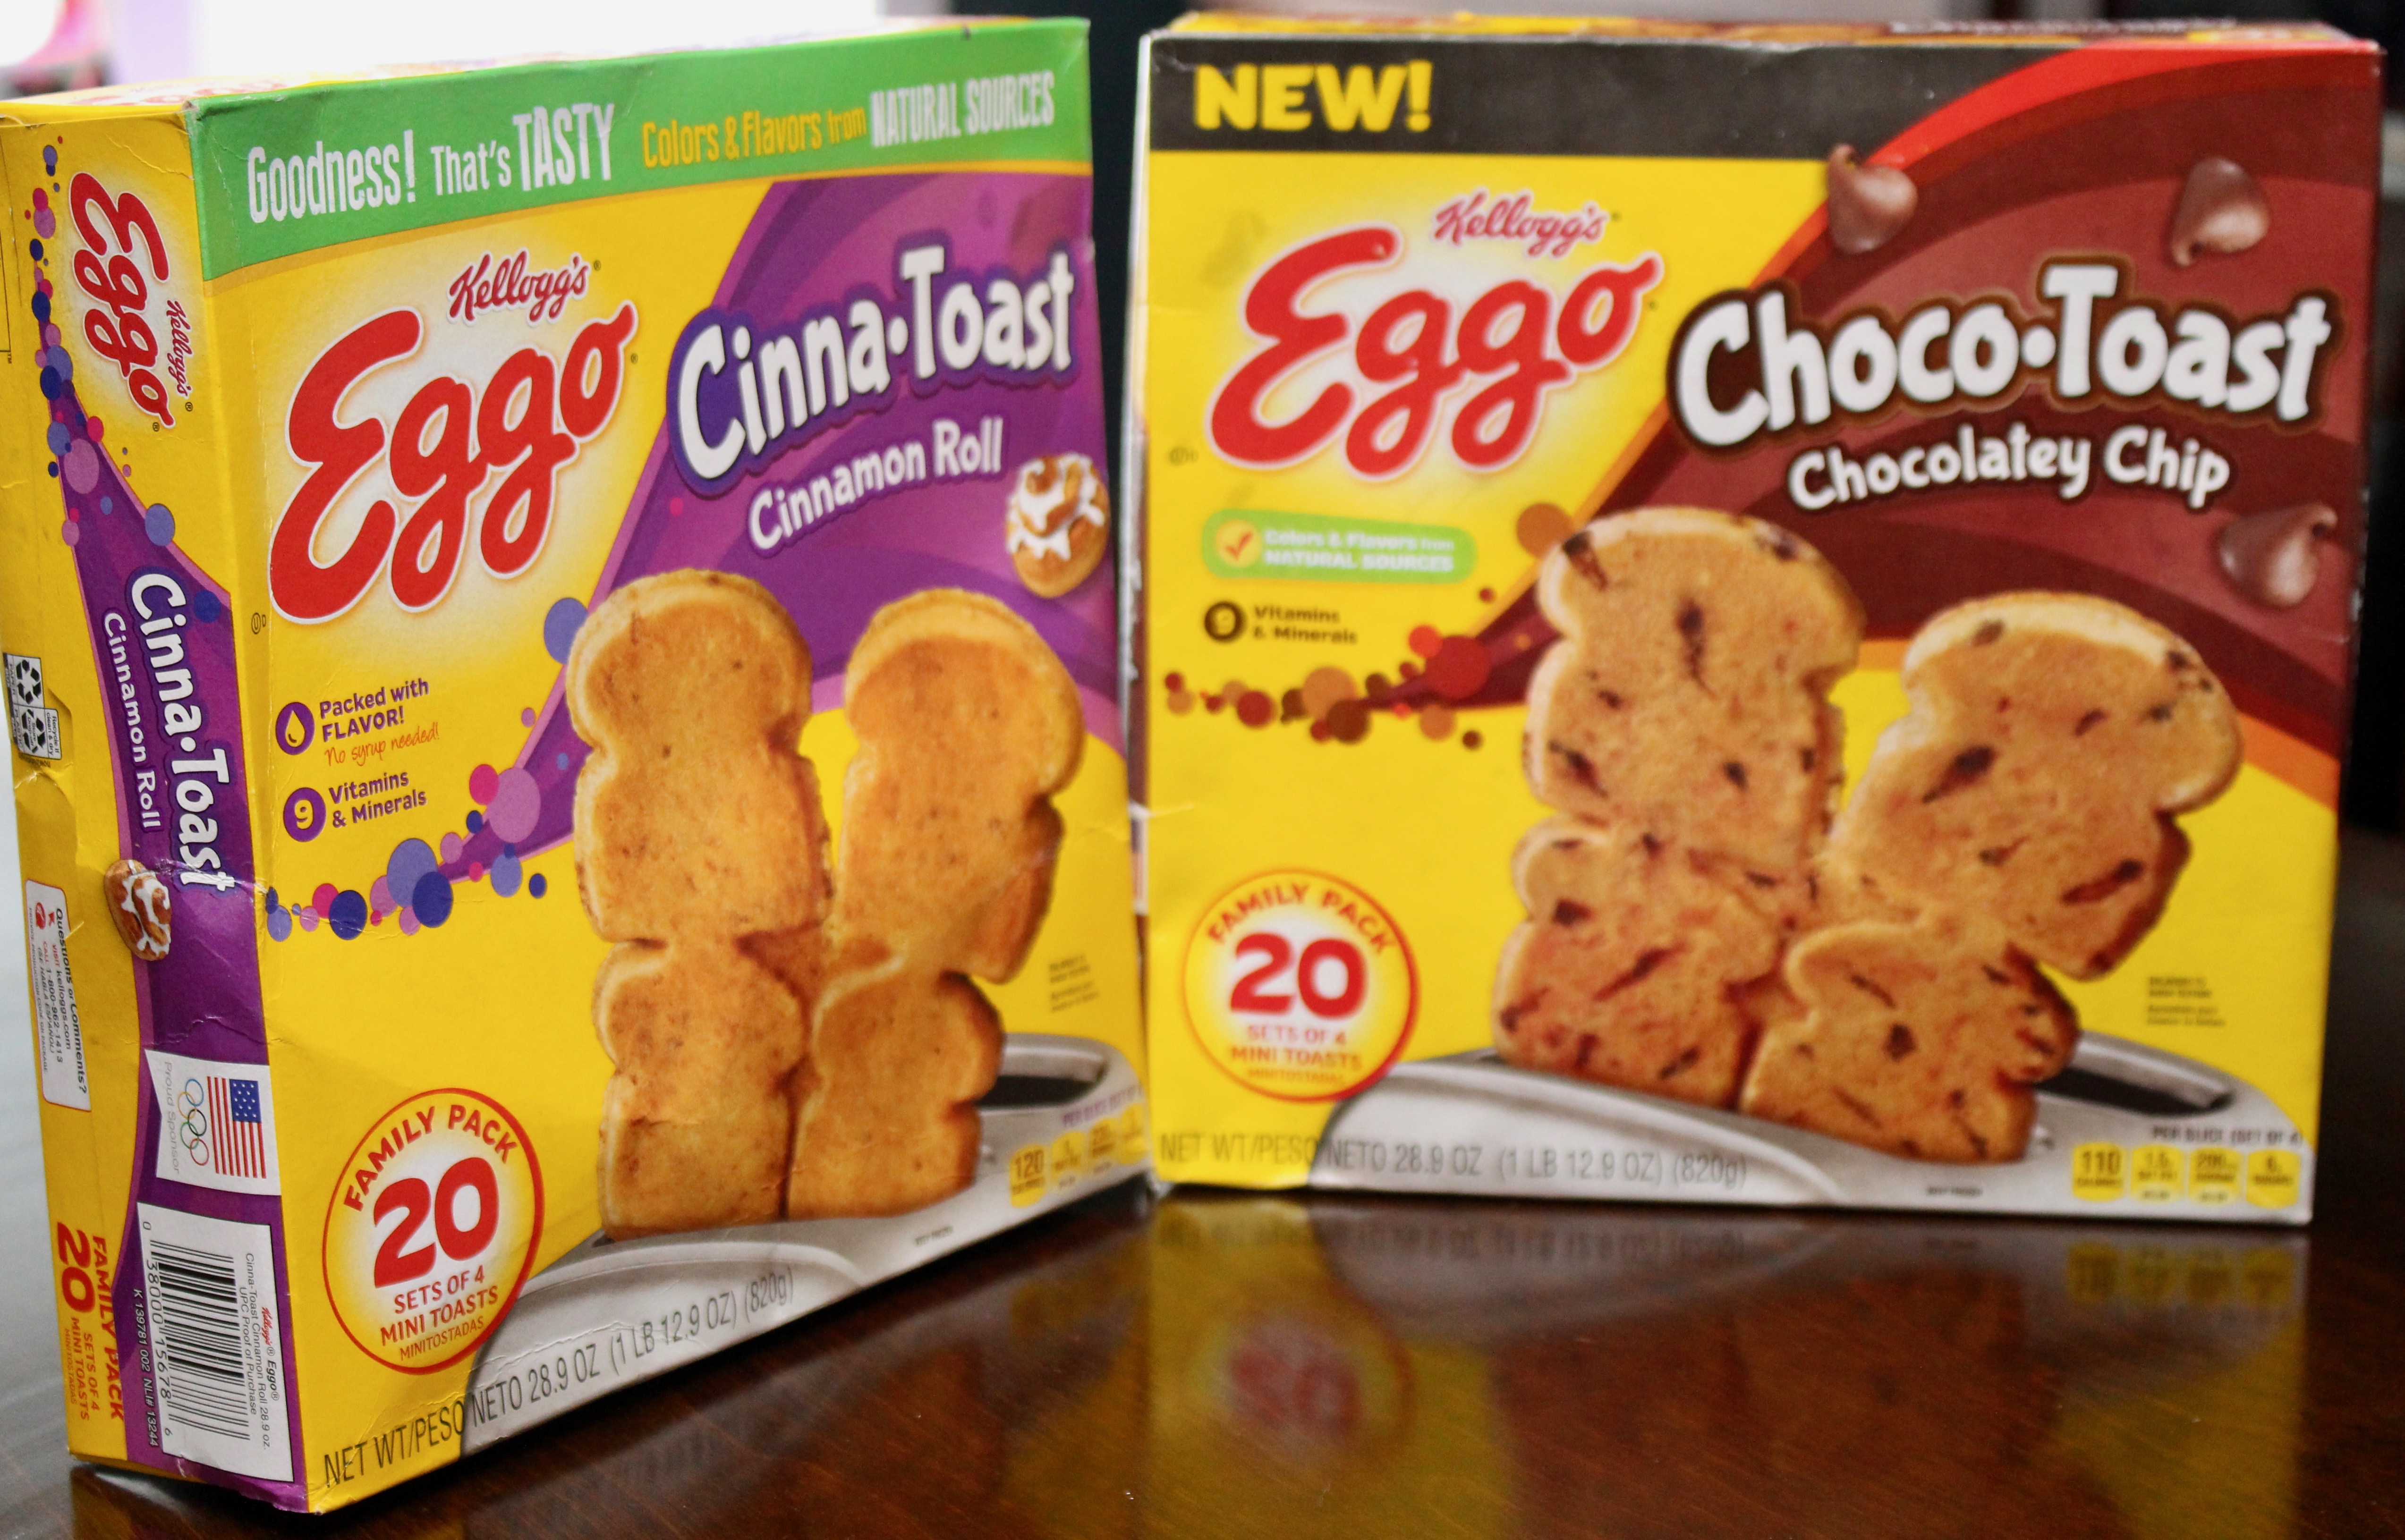 Eggo Cinna-Toast and Eggo Choco-Toast